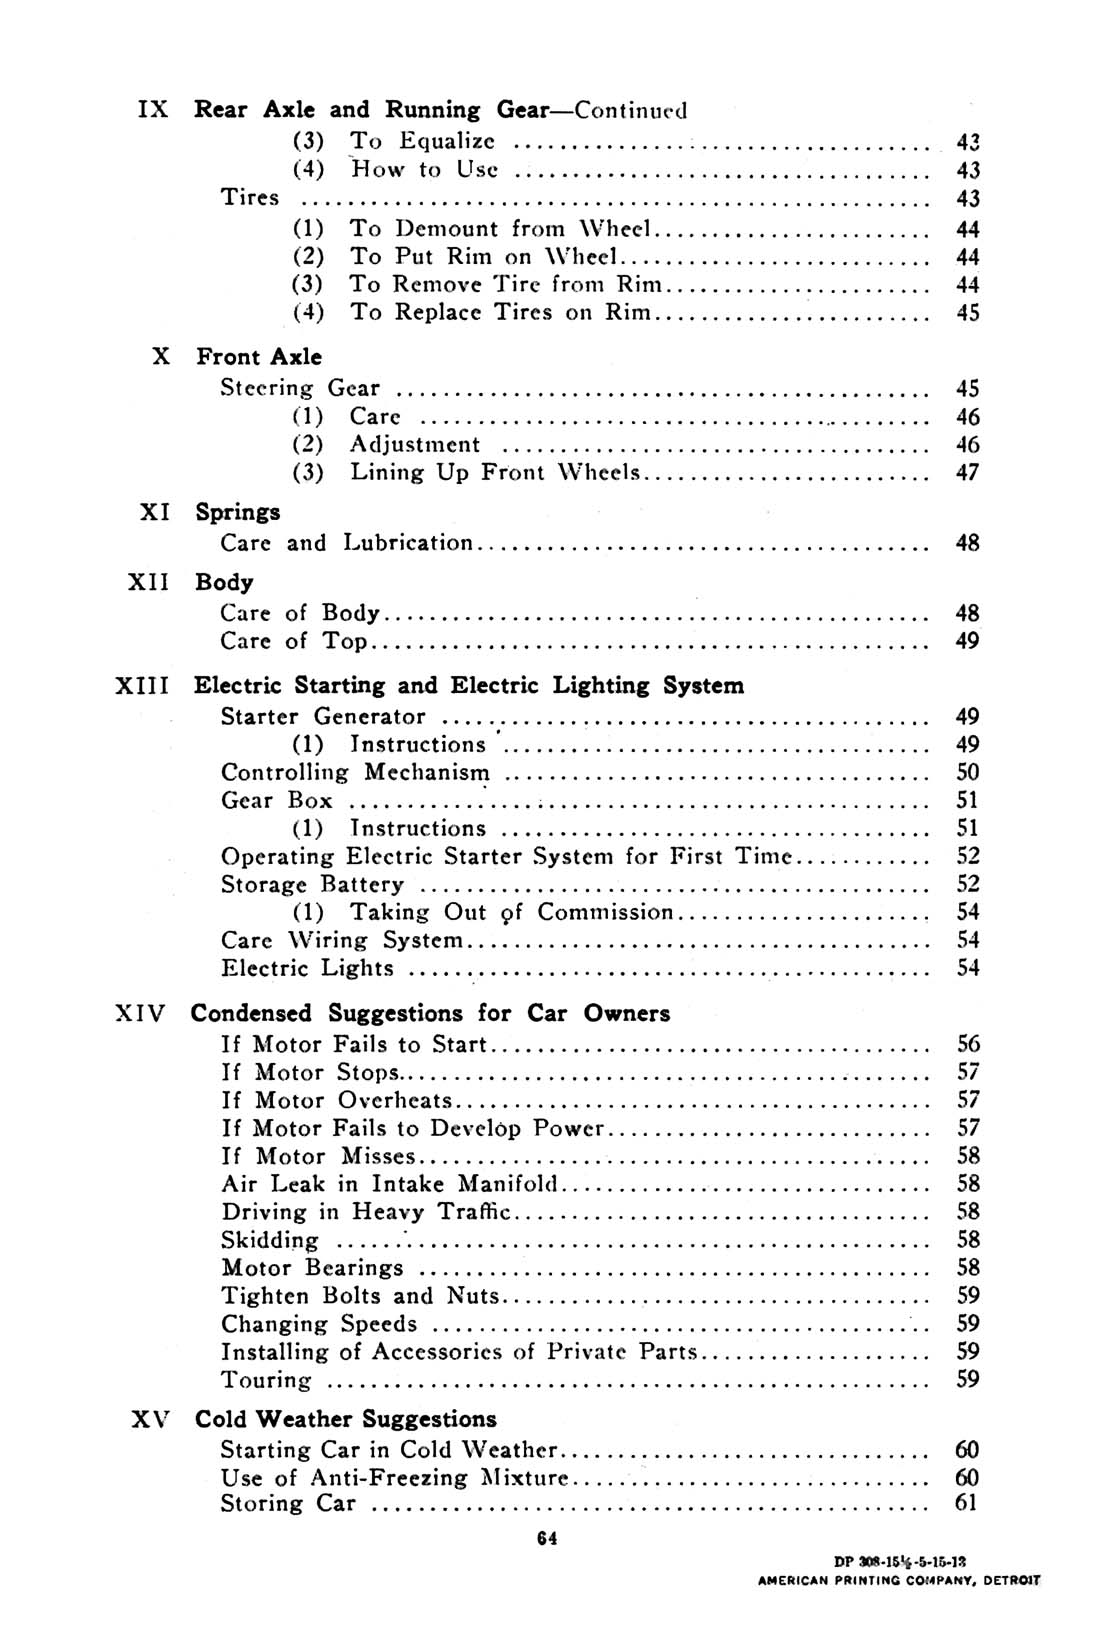 1913_Studebaker_Model_35_Manual-64